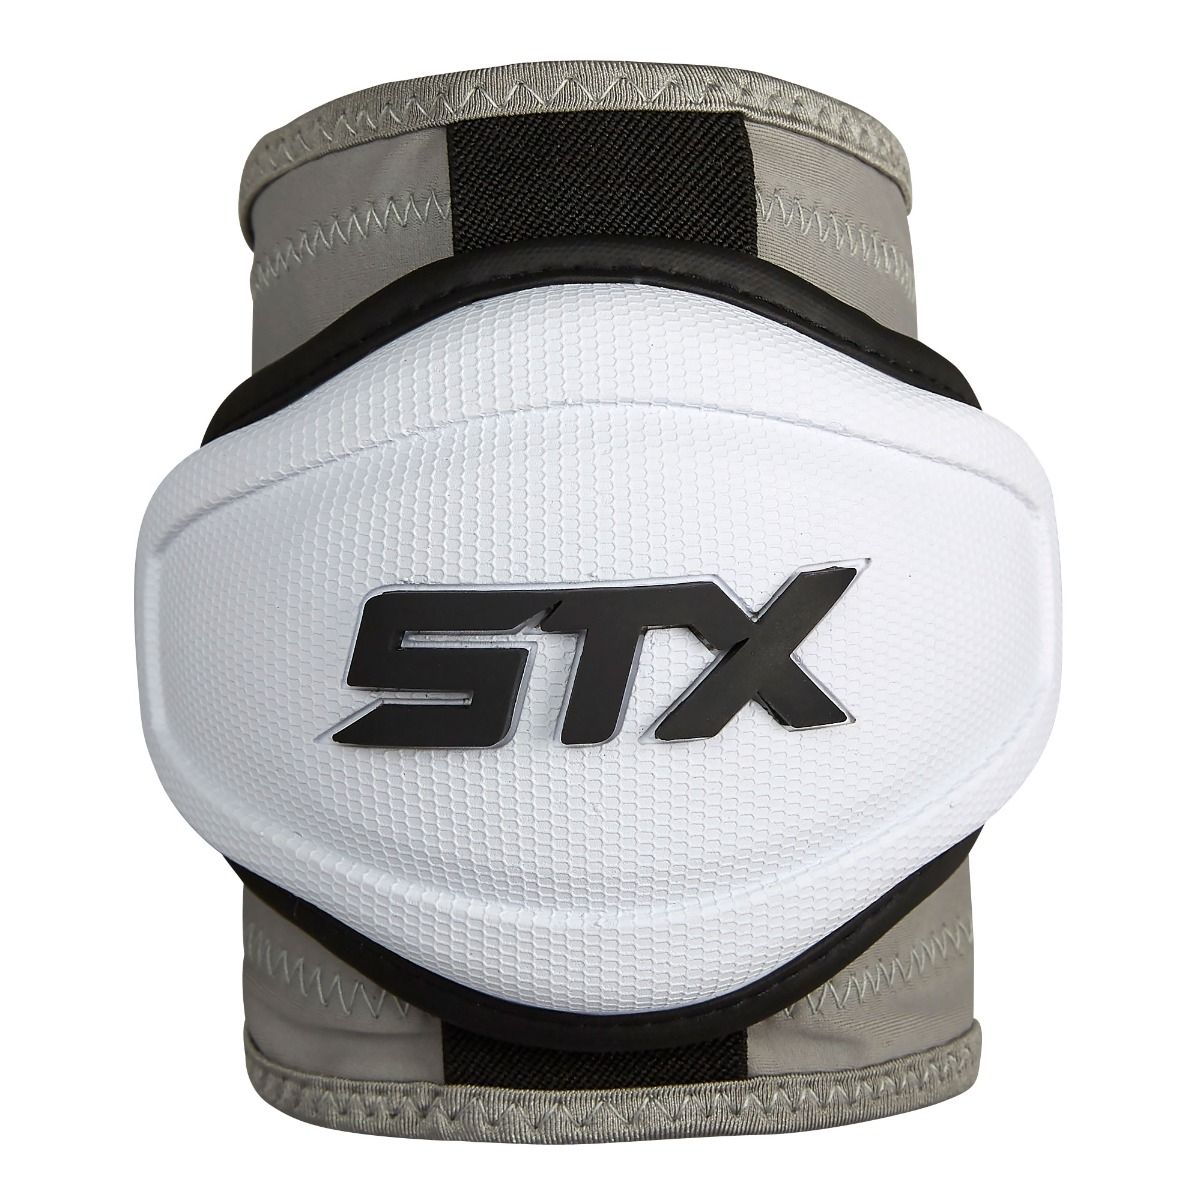 STX Stallion 900 Lacrosse Arm Pads Medium / White